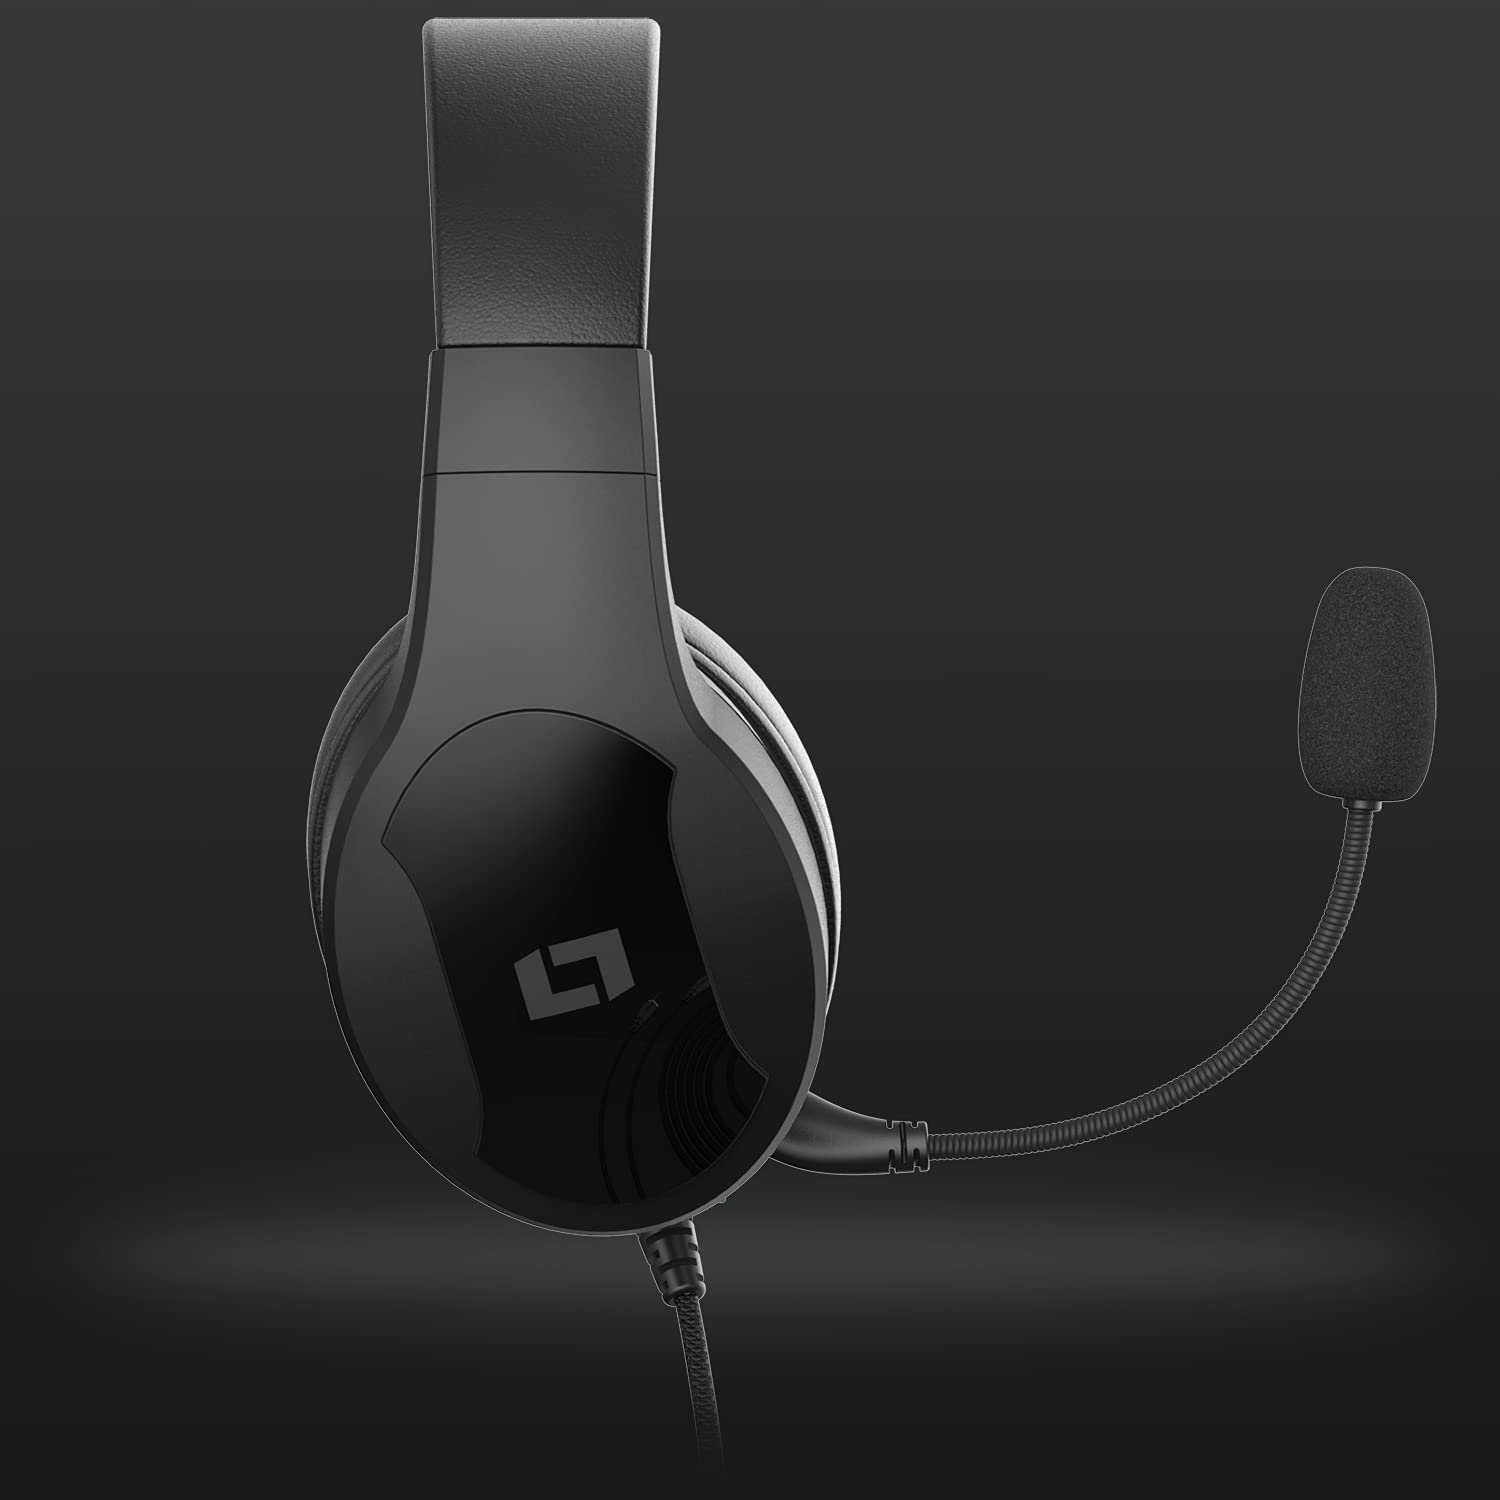 Lioncast LX25 Gaming-Headset (Geschlossener Kabel) Mikrofon mit Ohr, Gaming AUX dem abnehmbares Headset über Stereo Kopfhörer Stereo-Sound